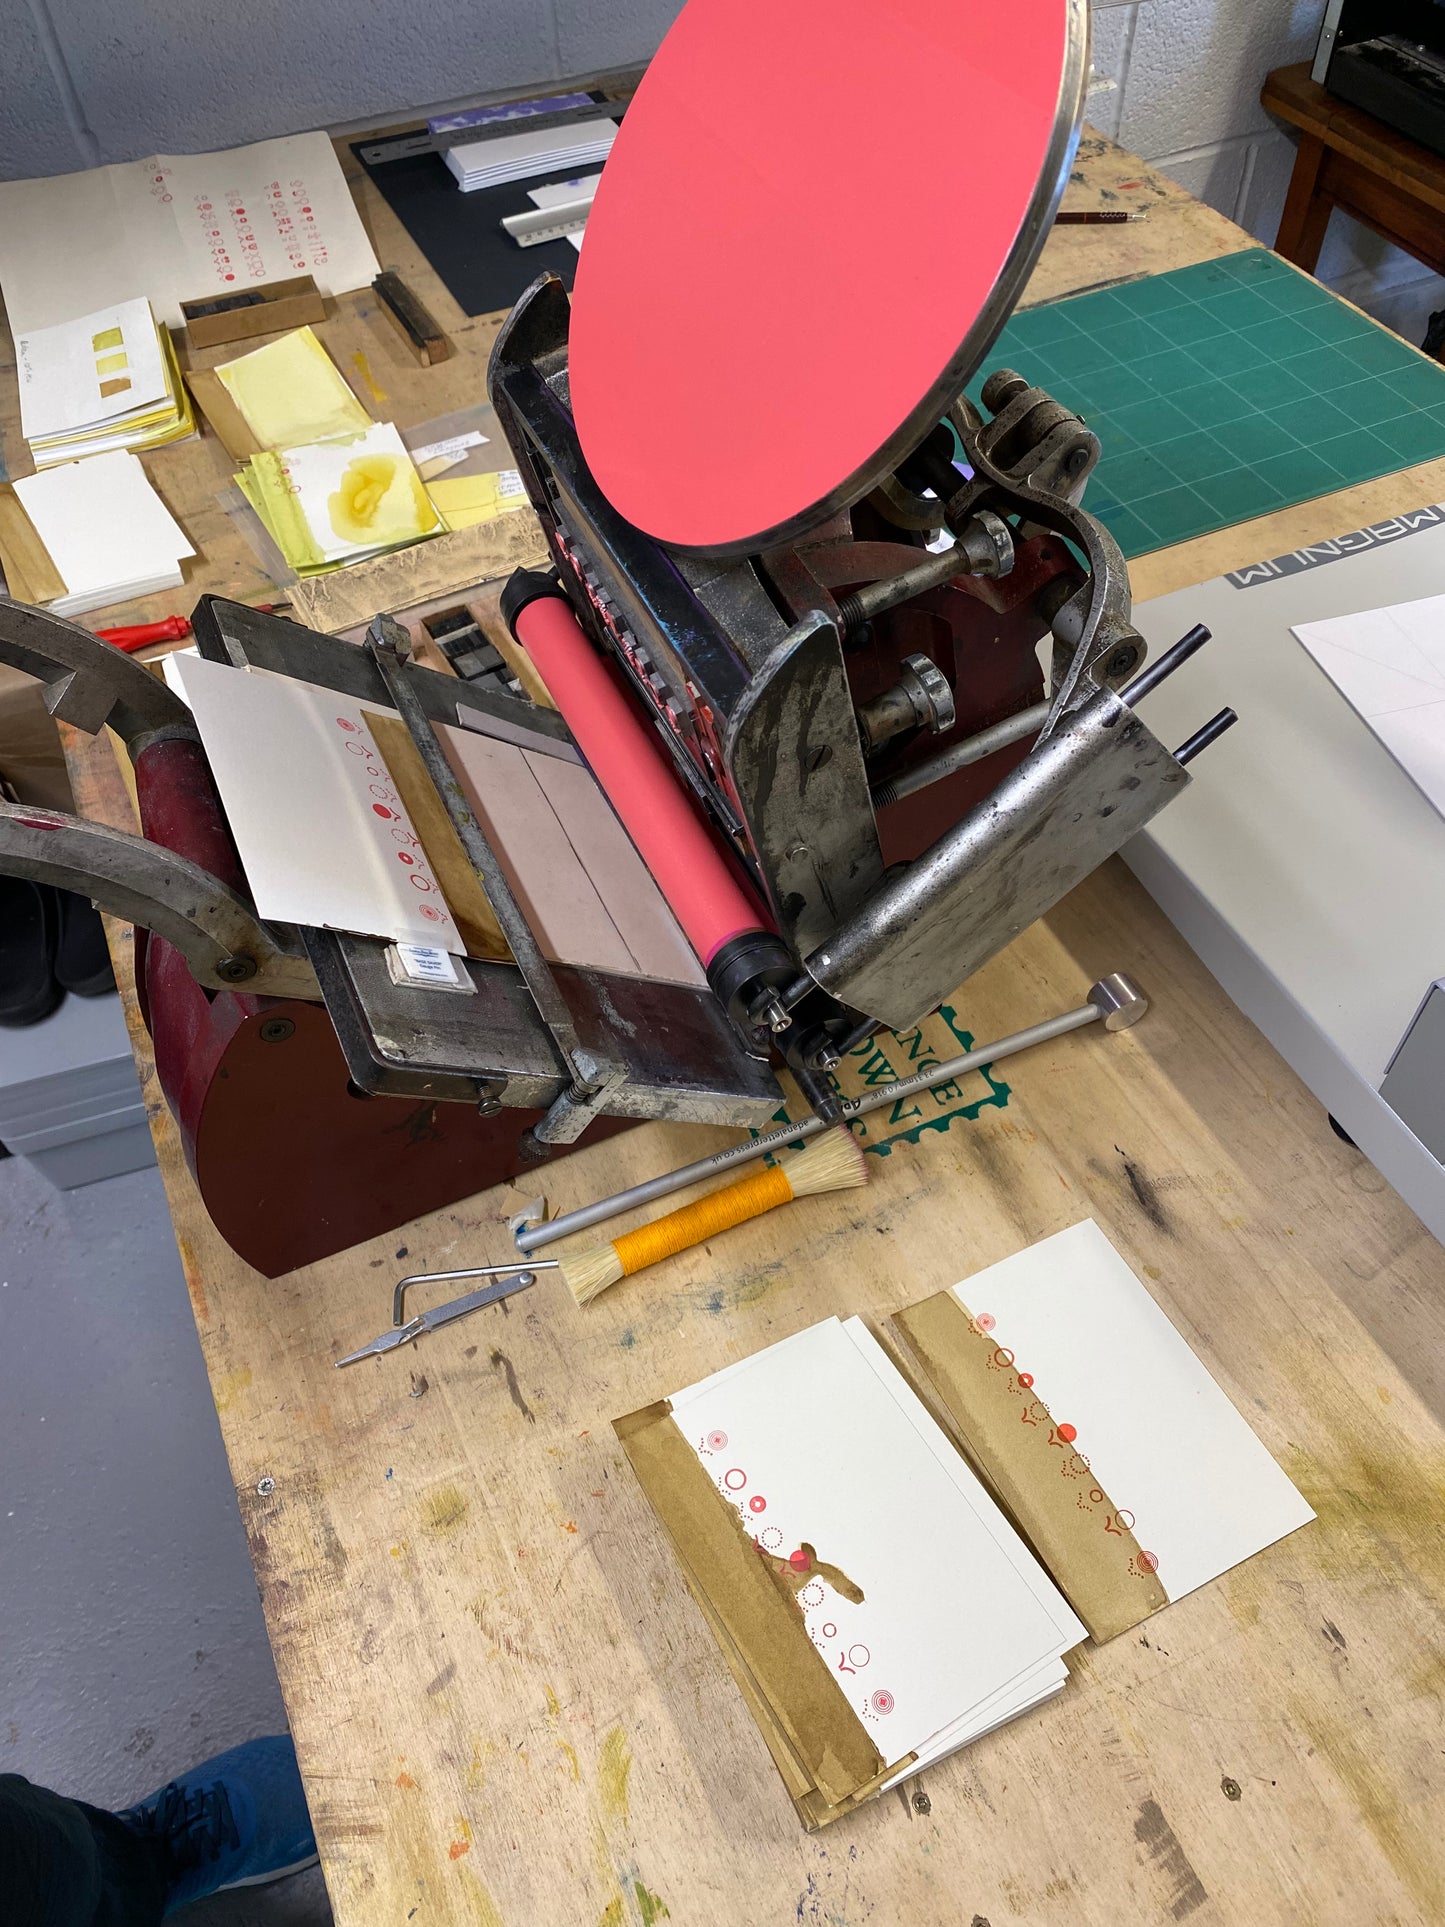 table top printing press